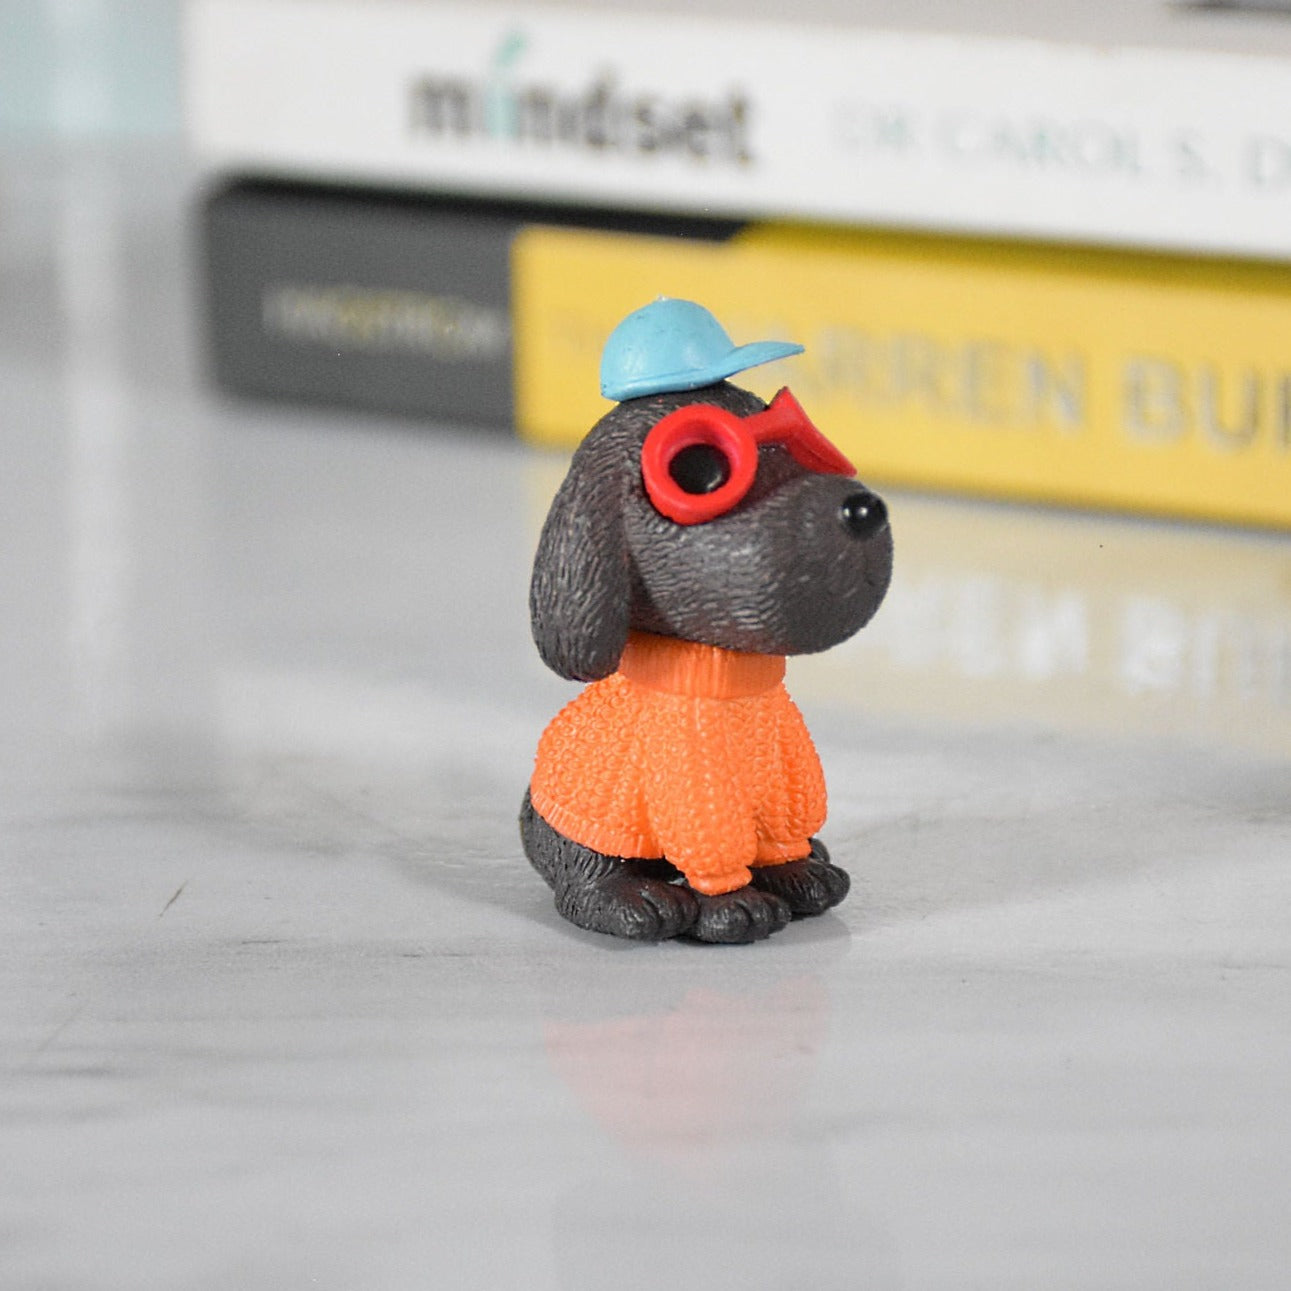 Miniature Dog wearing Cap for Garden Decor - Deczo